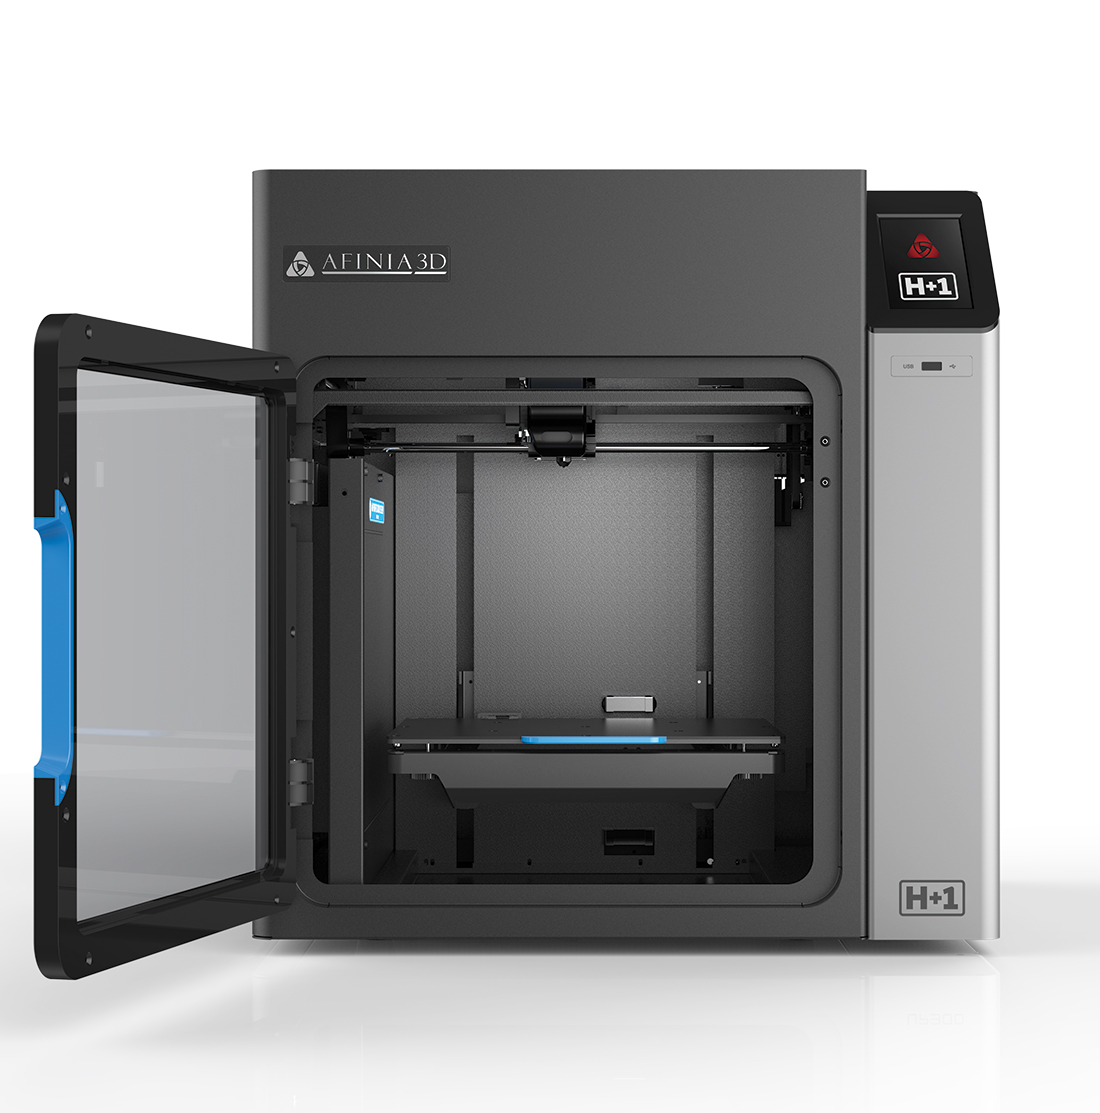 the new Affinia 3D printer